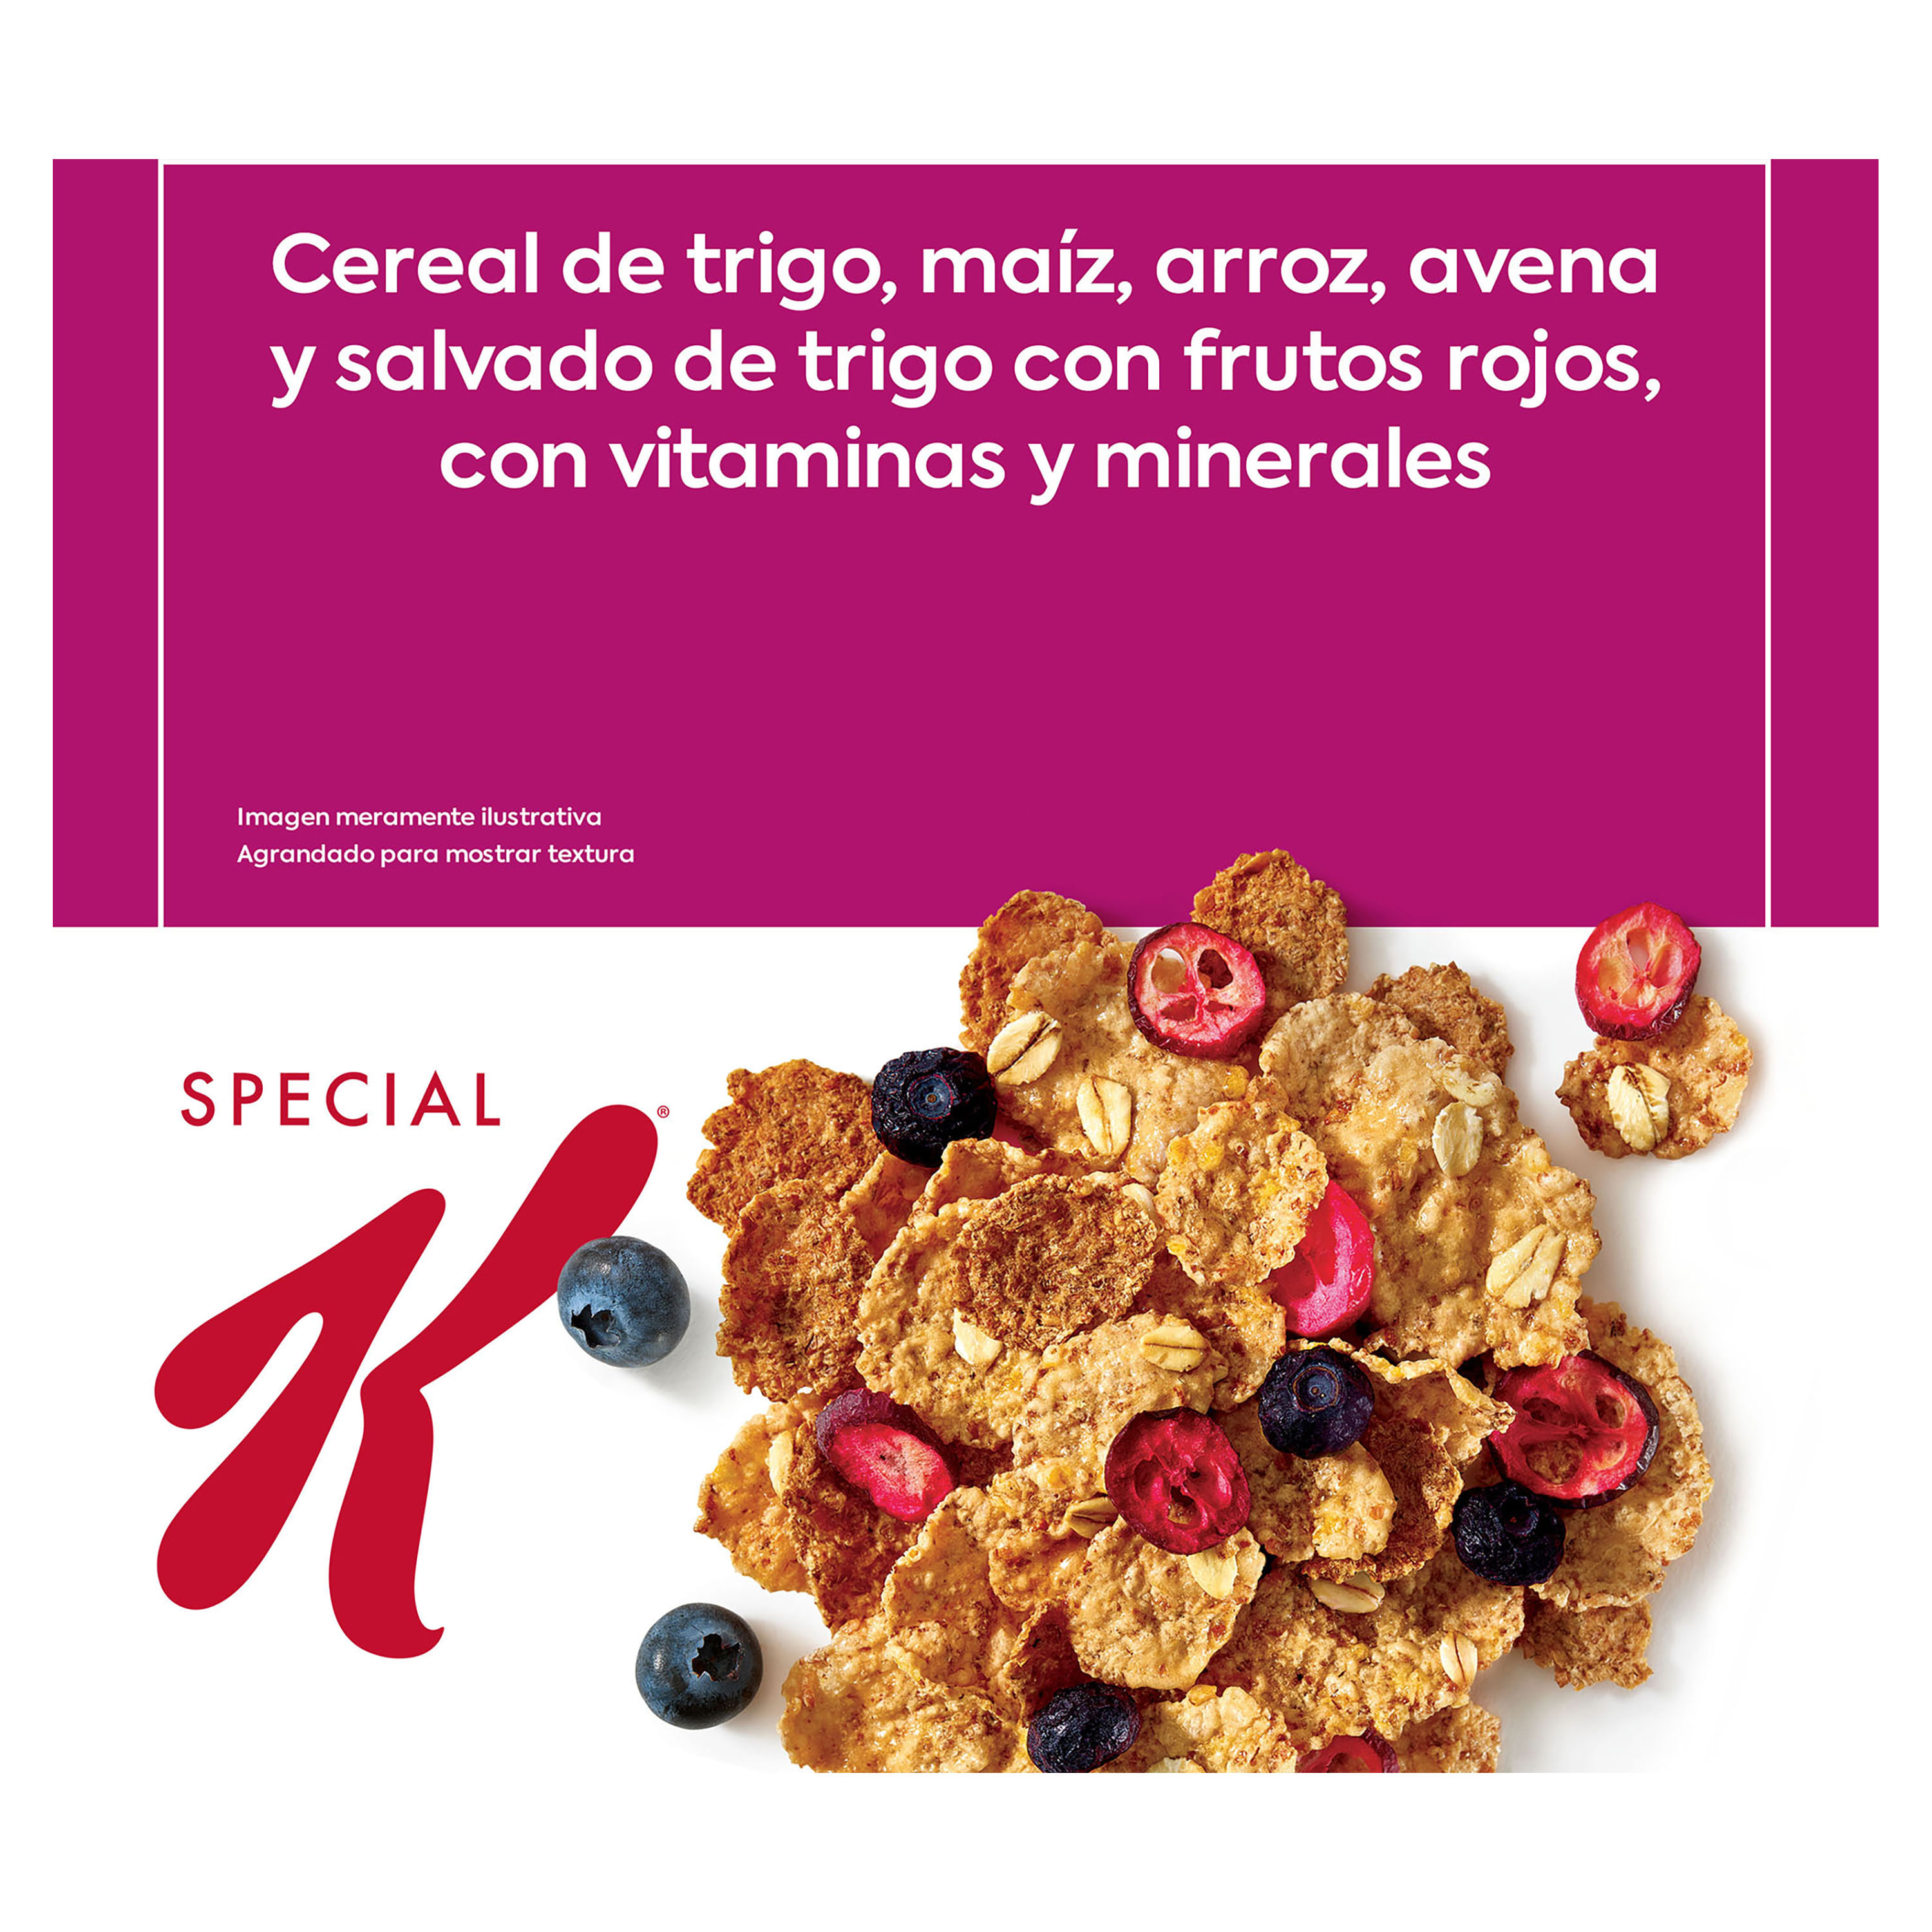 Caja Cereal Special K Cosecha Roja 340G/24P – MayoreoTotal